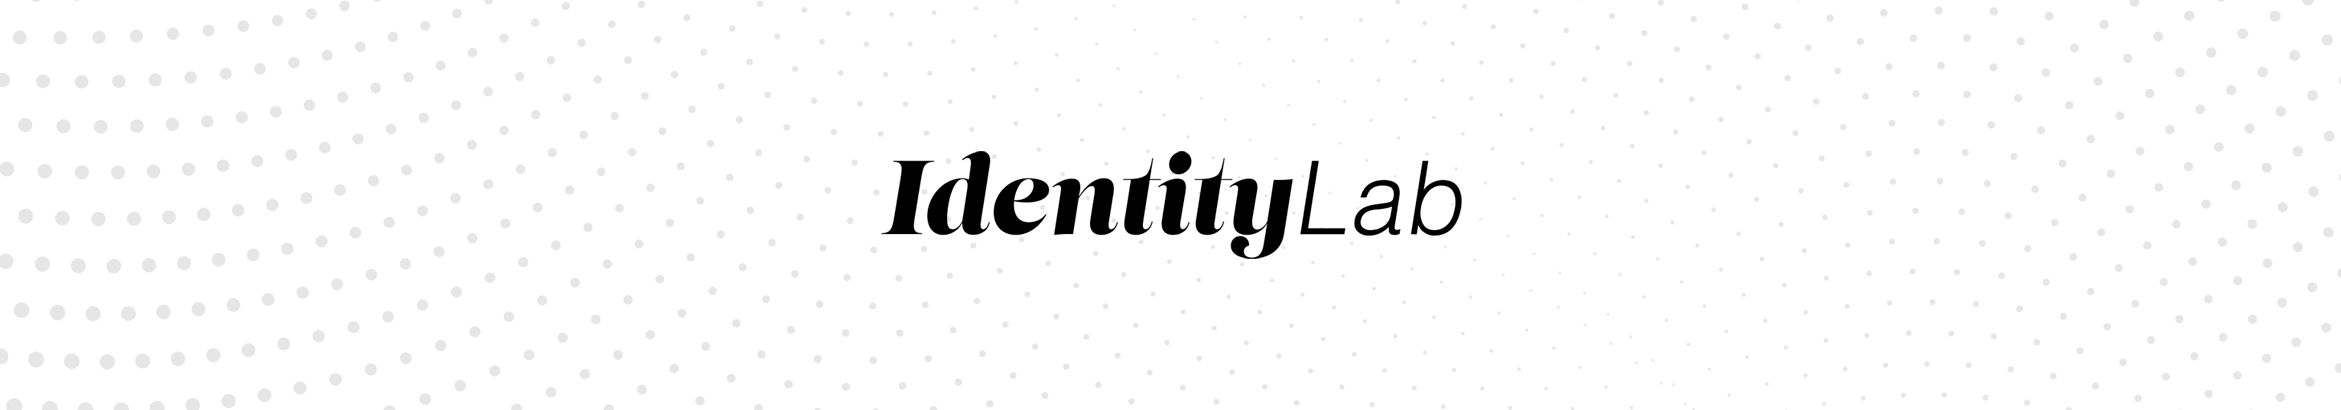 Identity Lab's profile banner